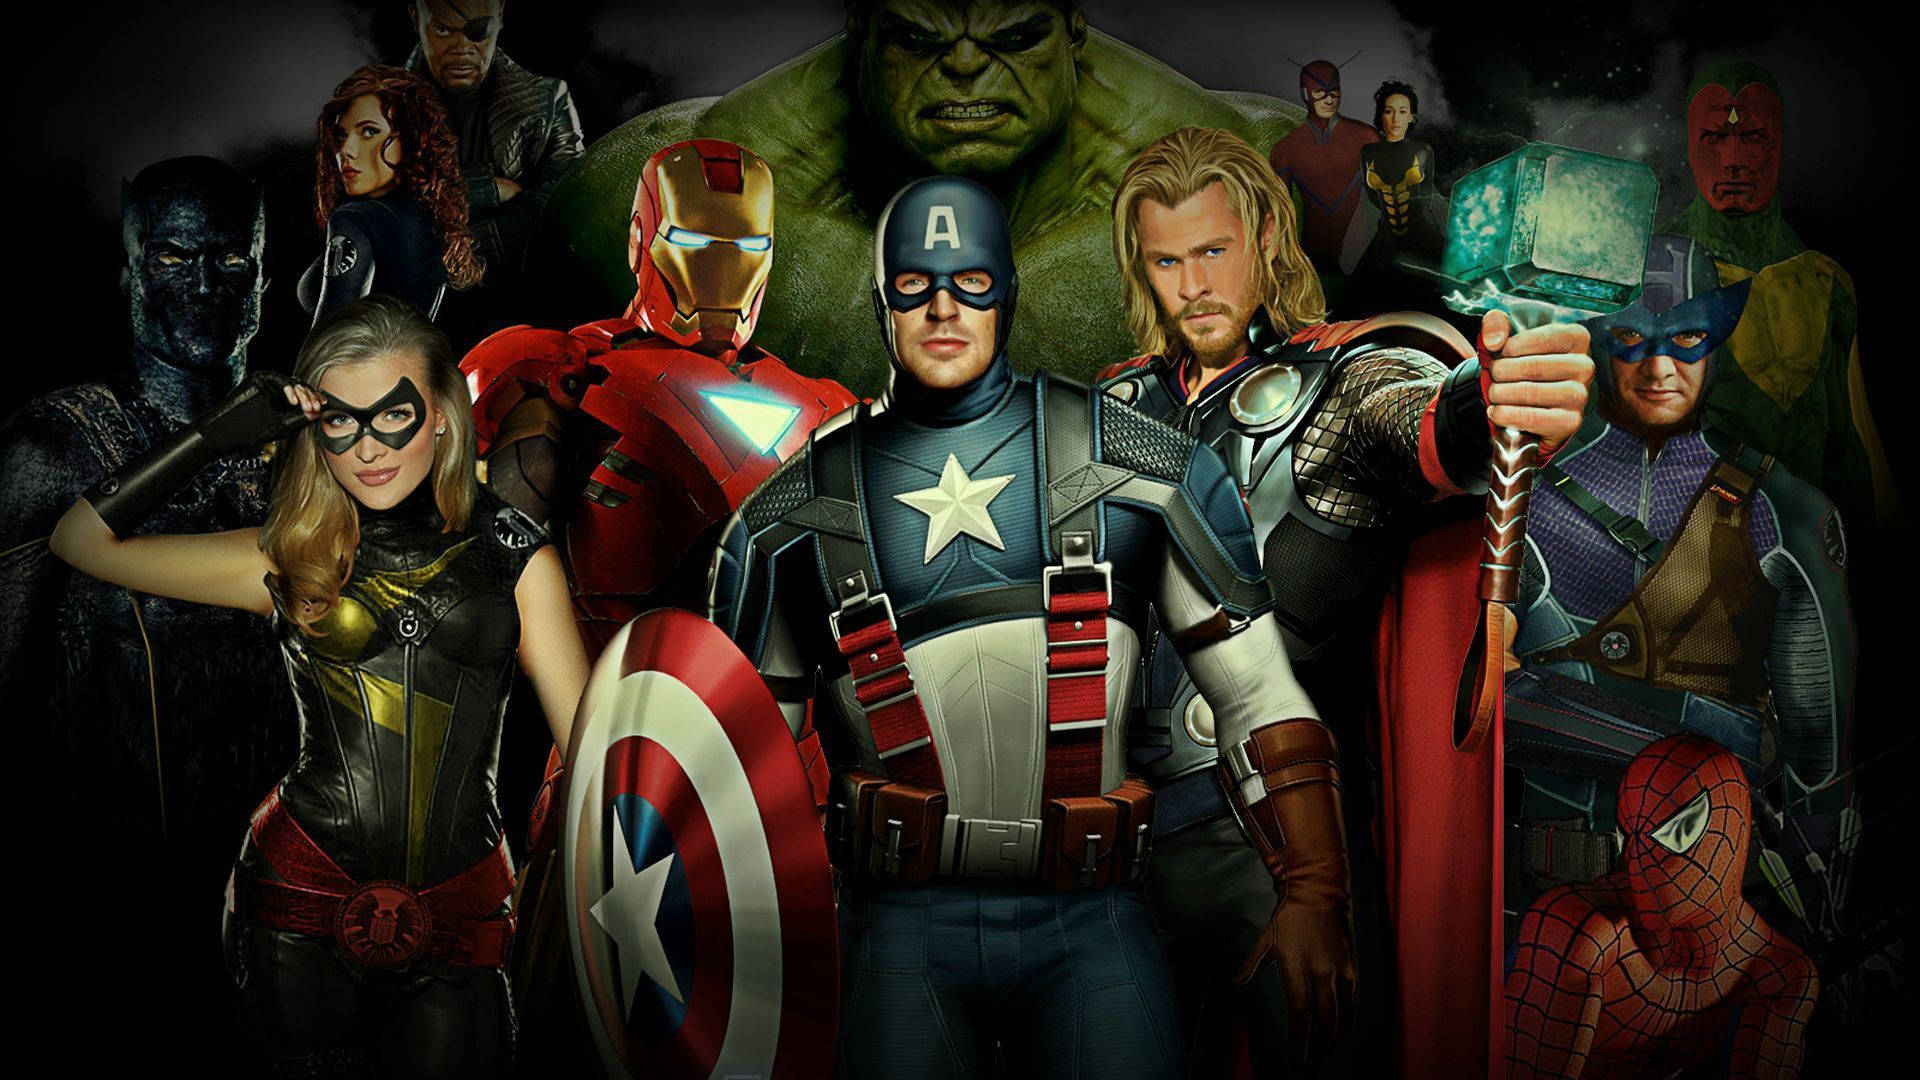 The Avengers assembled for battle Wallpaper